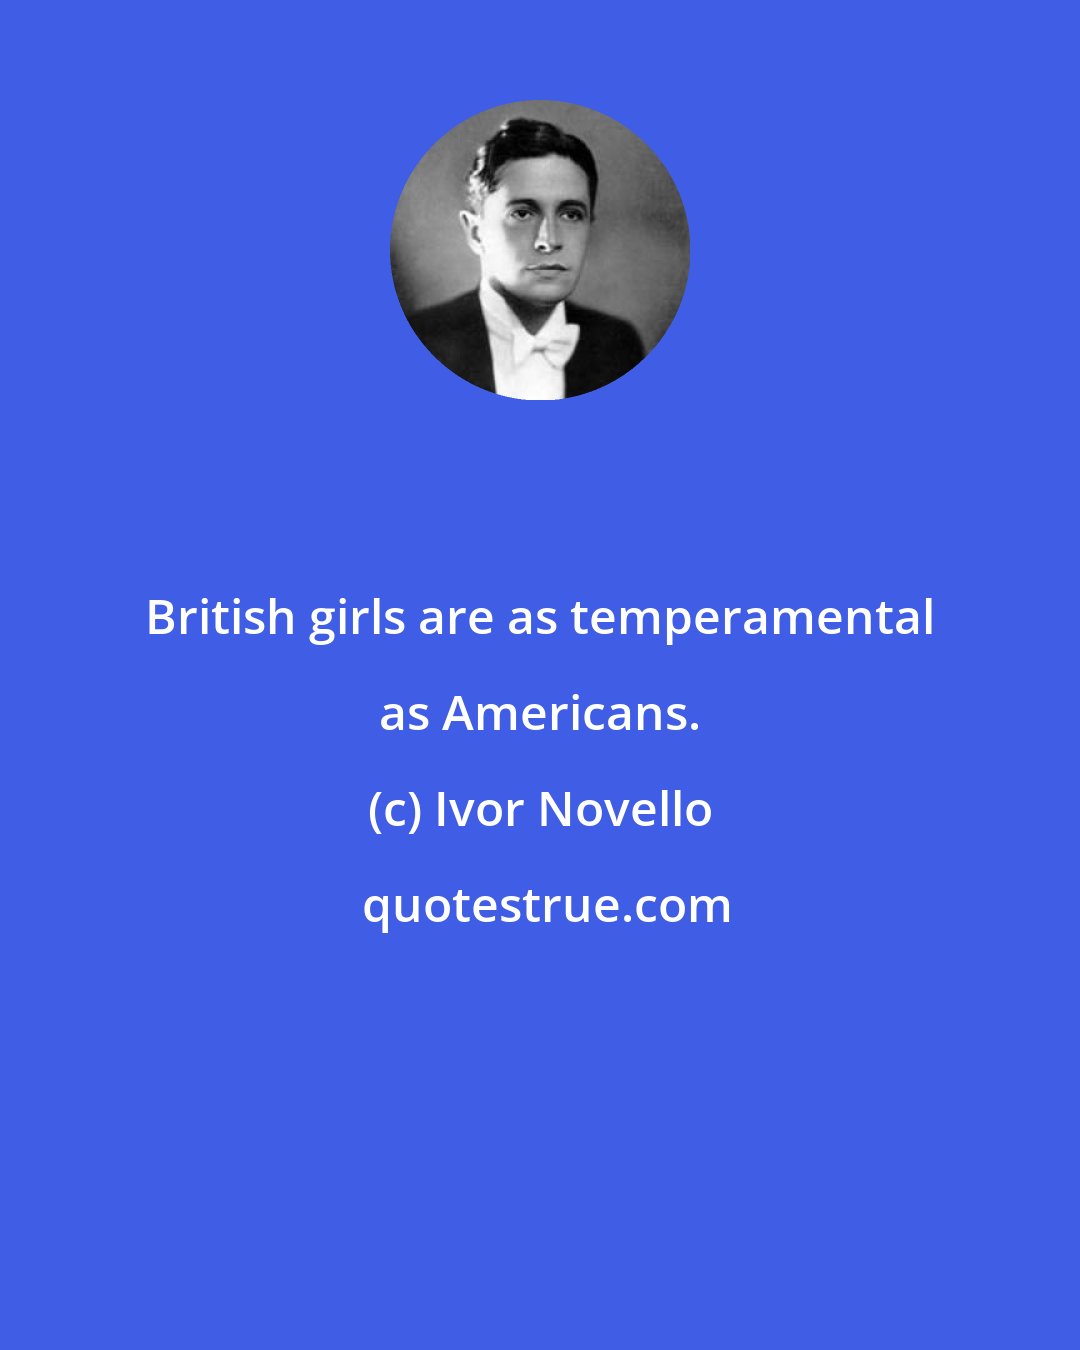 Ivor Novello: British girls are as temperamental as Americans.